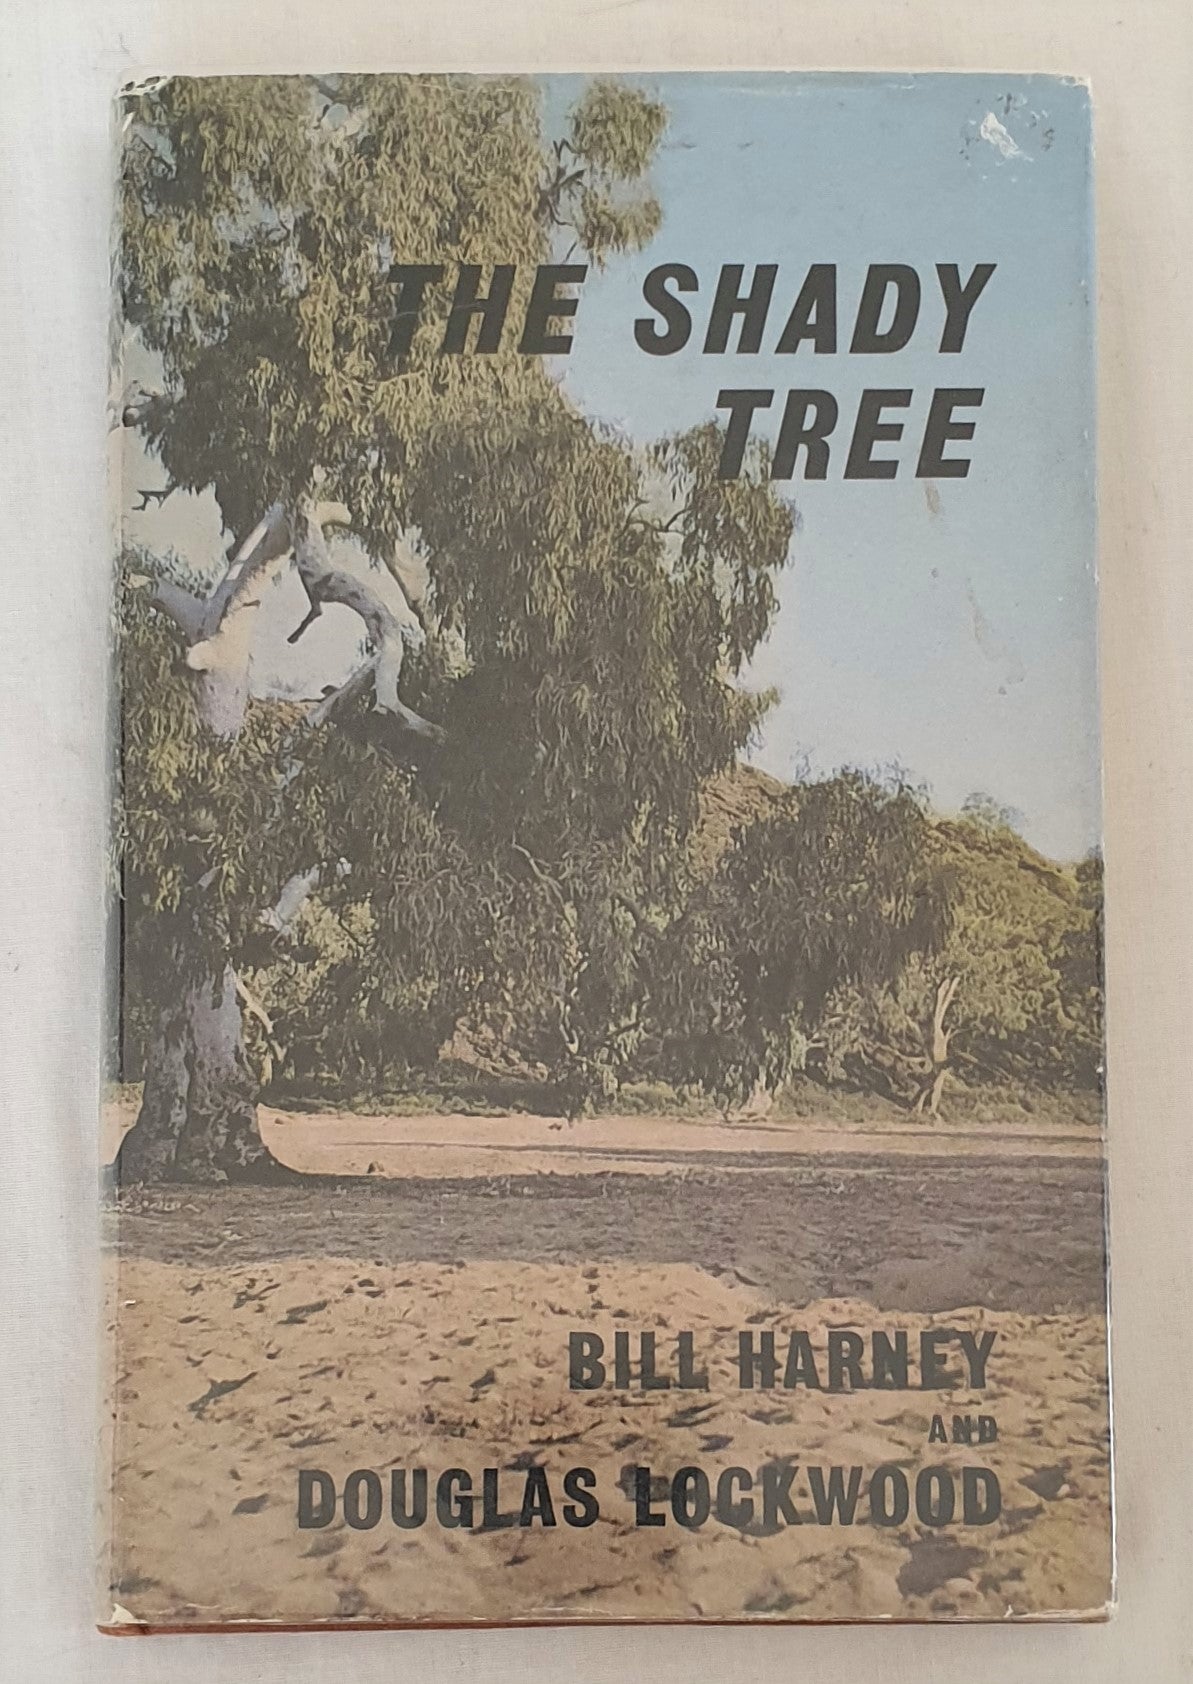 The Shady Tree by Bill Harney and Douglas Lockwood